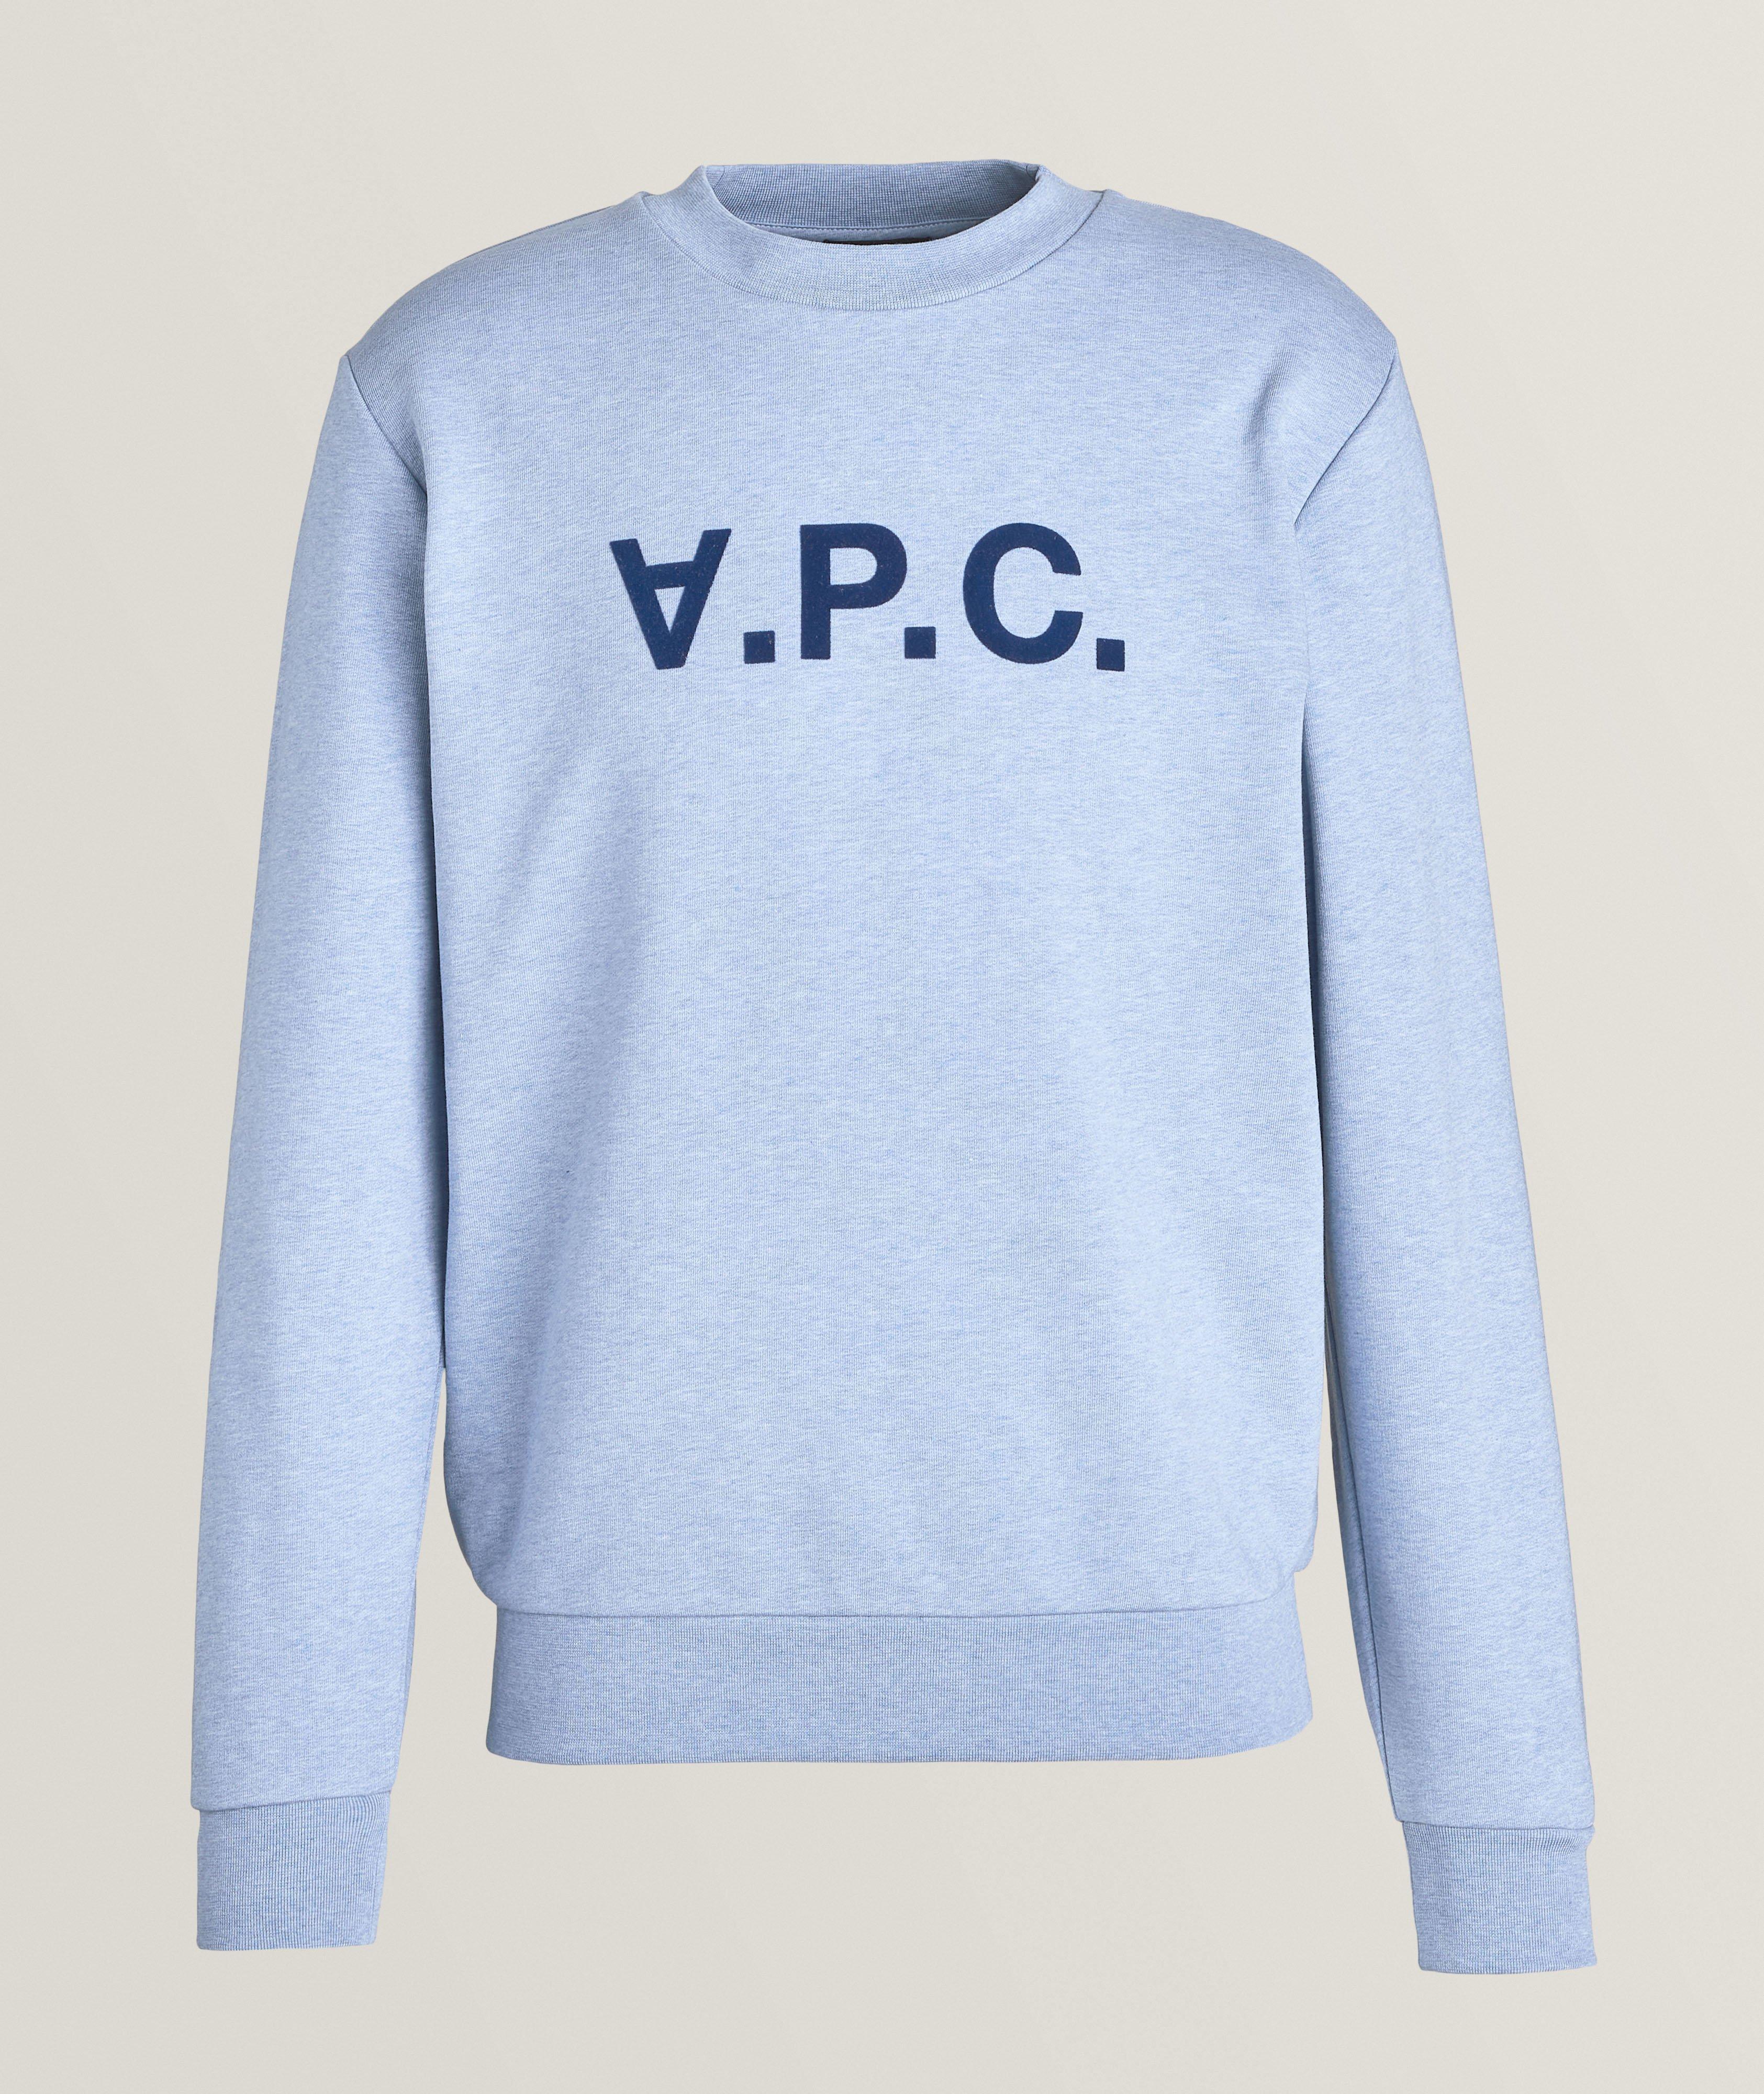 Grand VPC Long-Sleeve Cotton Sweatshirt image 0